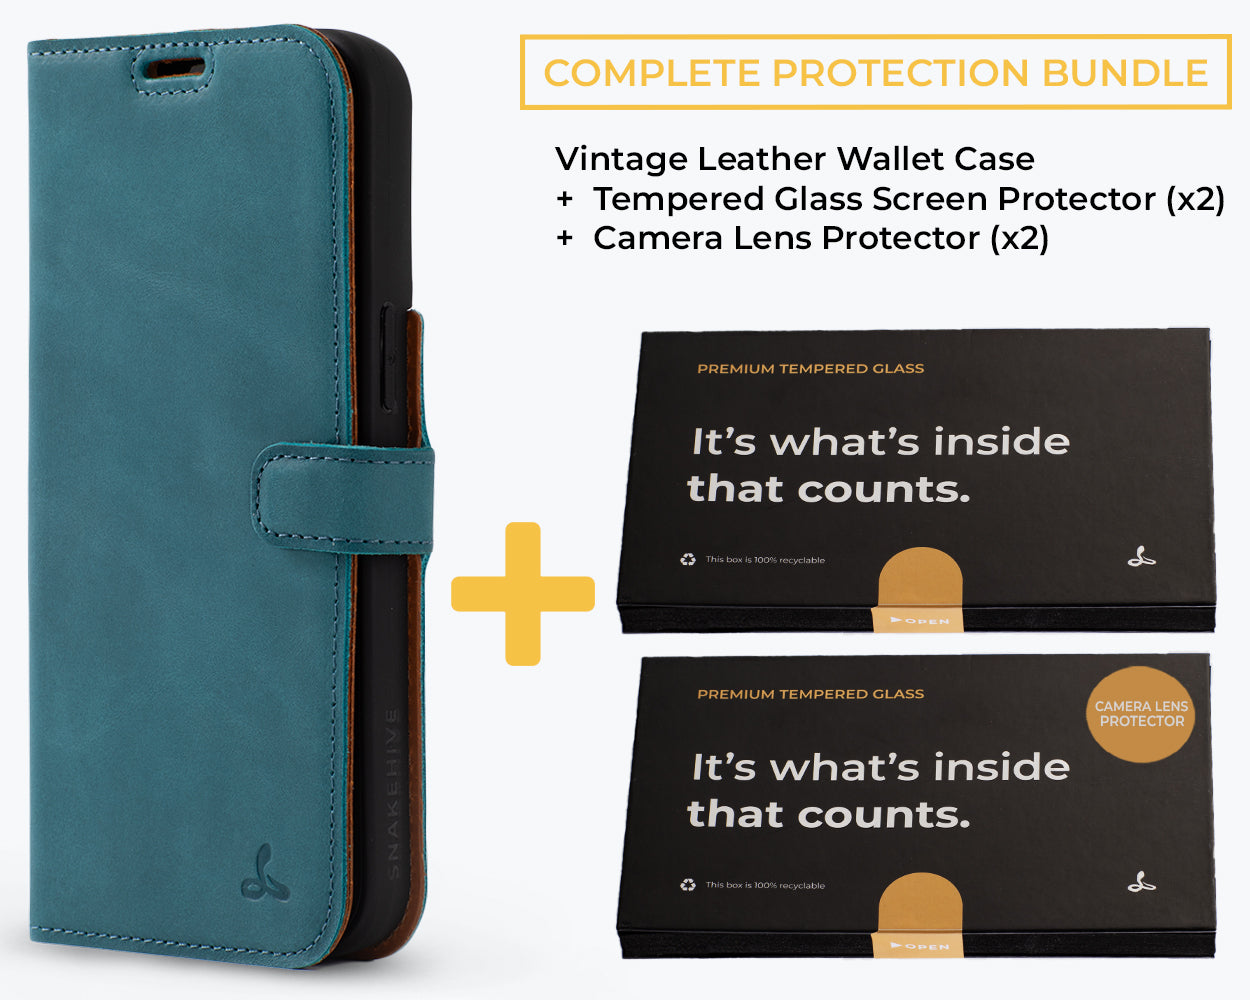 Complete Protection Bundle (Vintage Wallet) - Apple iPhone 12 Mini